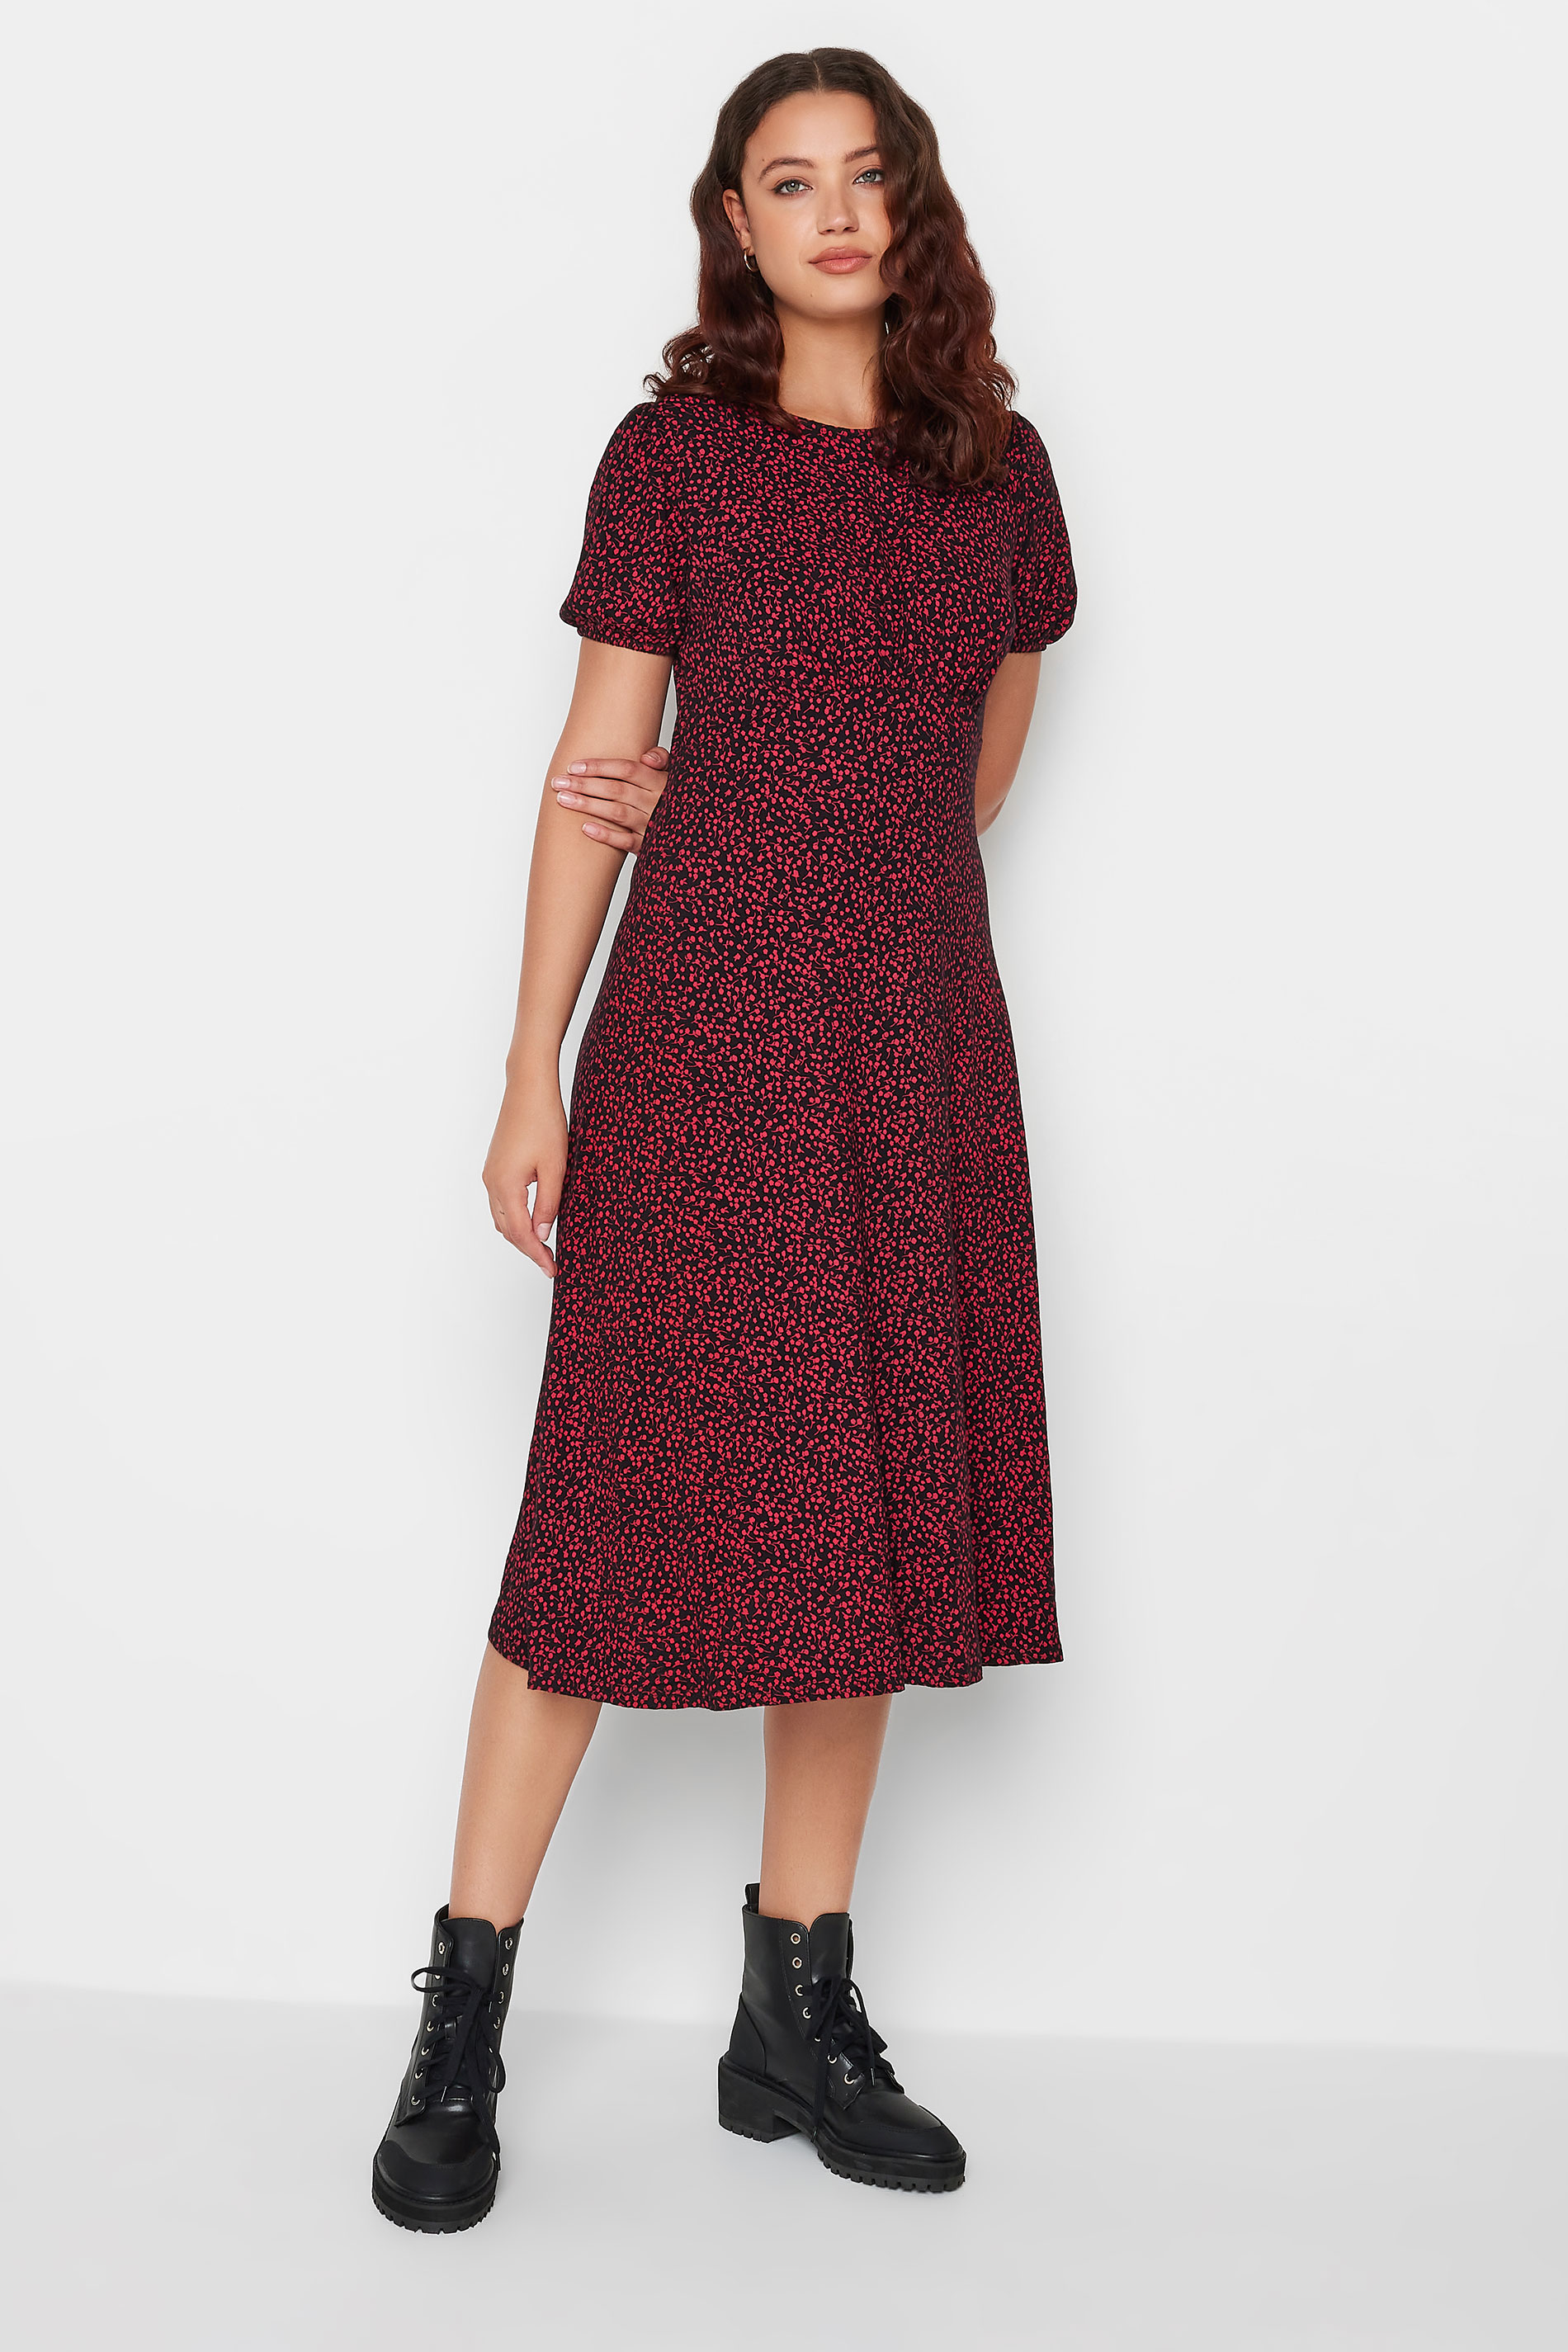 LTS Tall Women's Black & Red Ditsy Floral Print Midi Tea Dress | Long Tall Sally 1